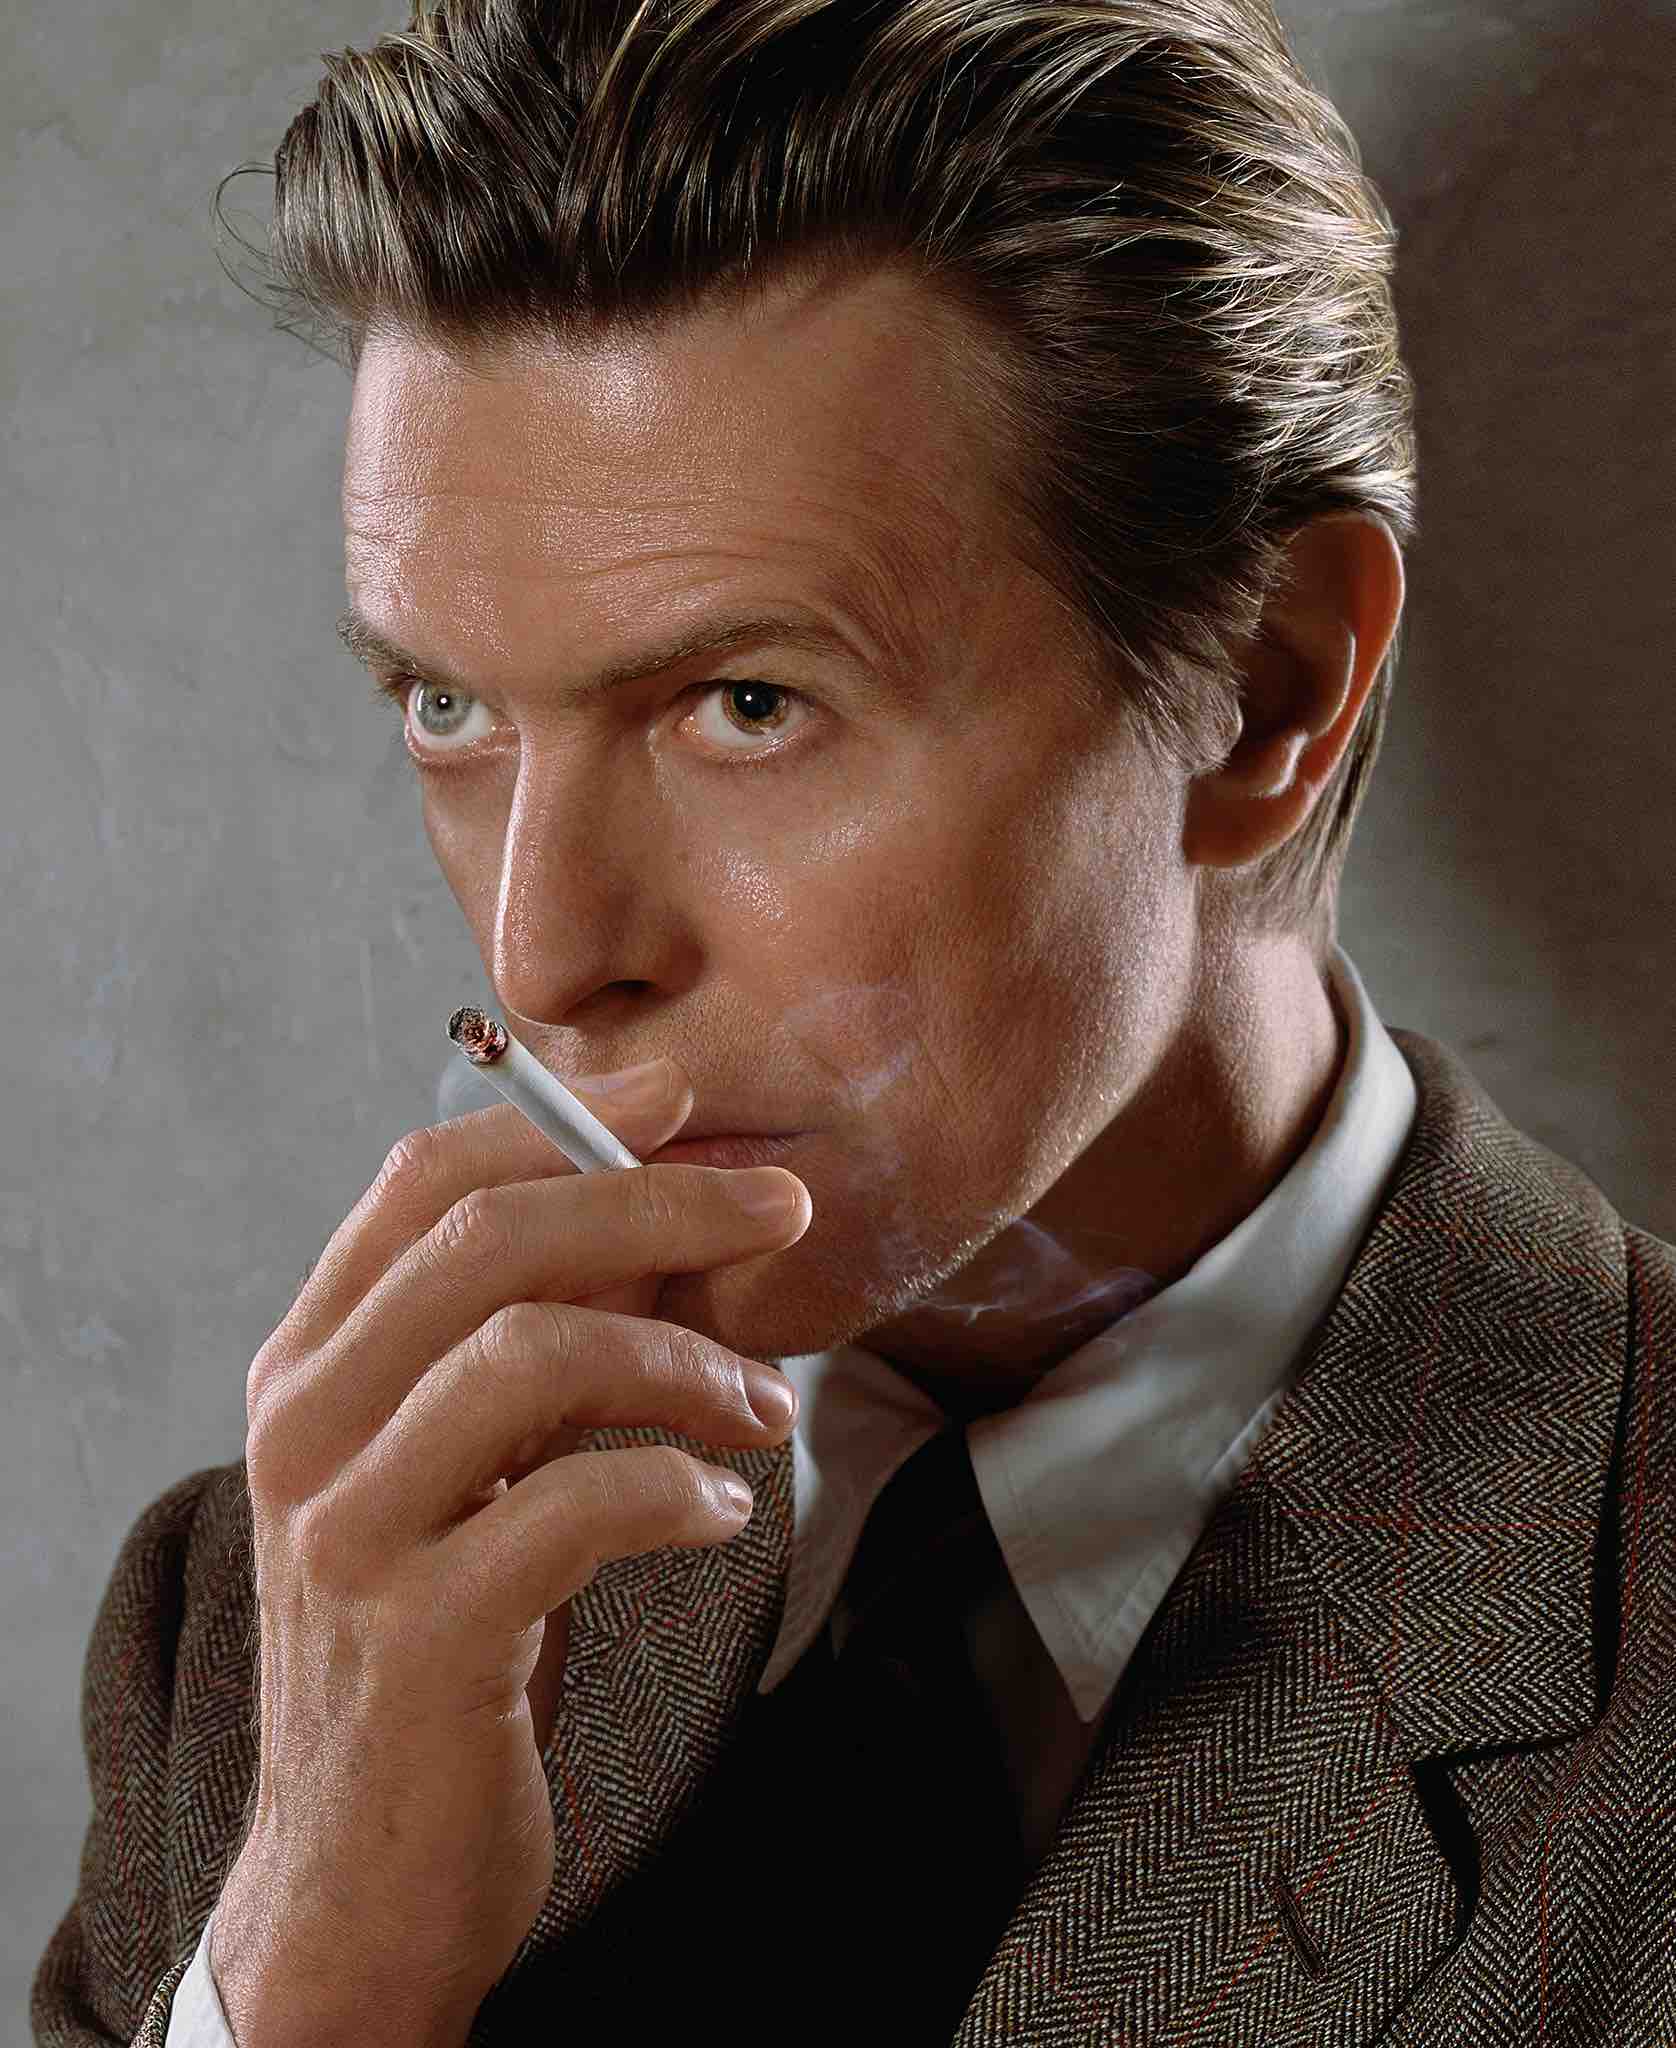 David Bowie, album cover shoot for Heathen, New York, 2001. Broncolor Flooter S. (photo by Markus Klinko)